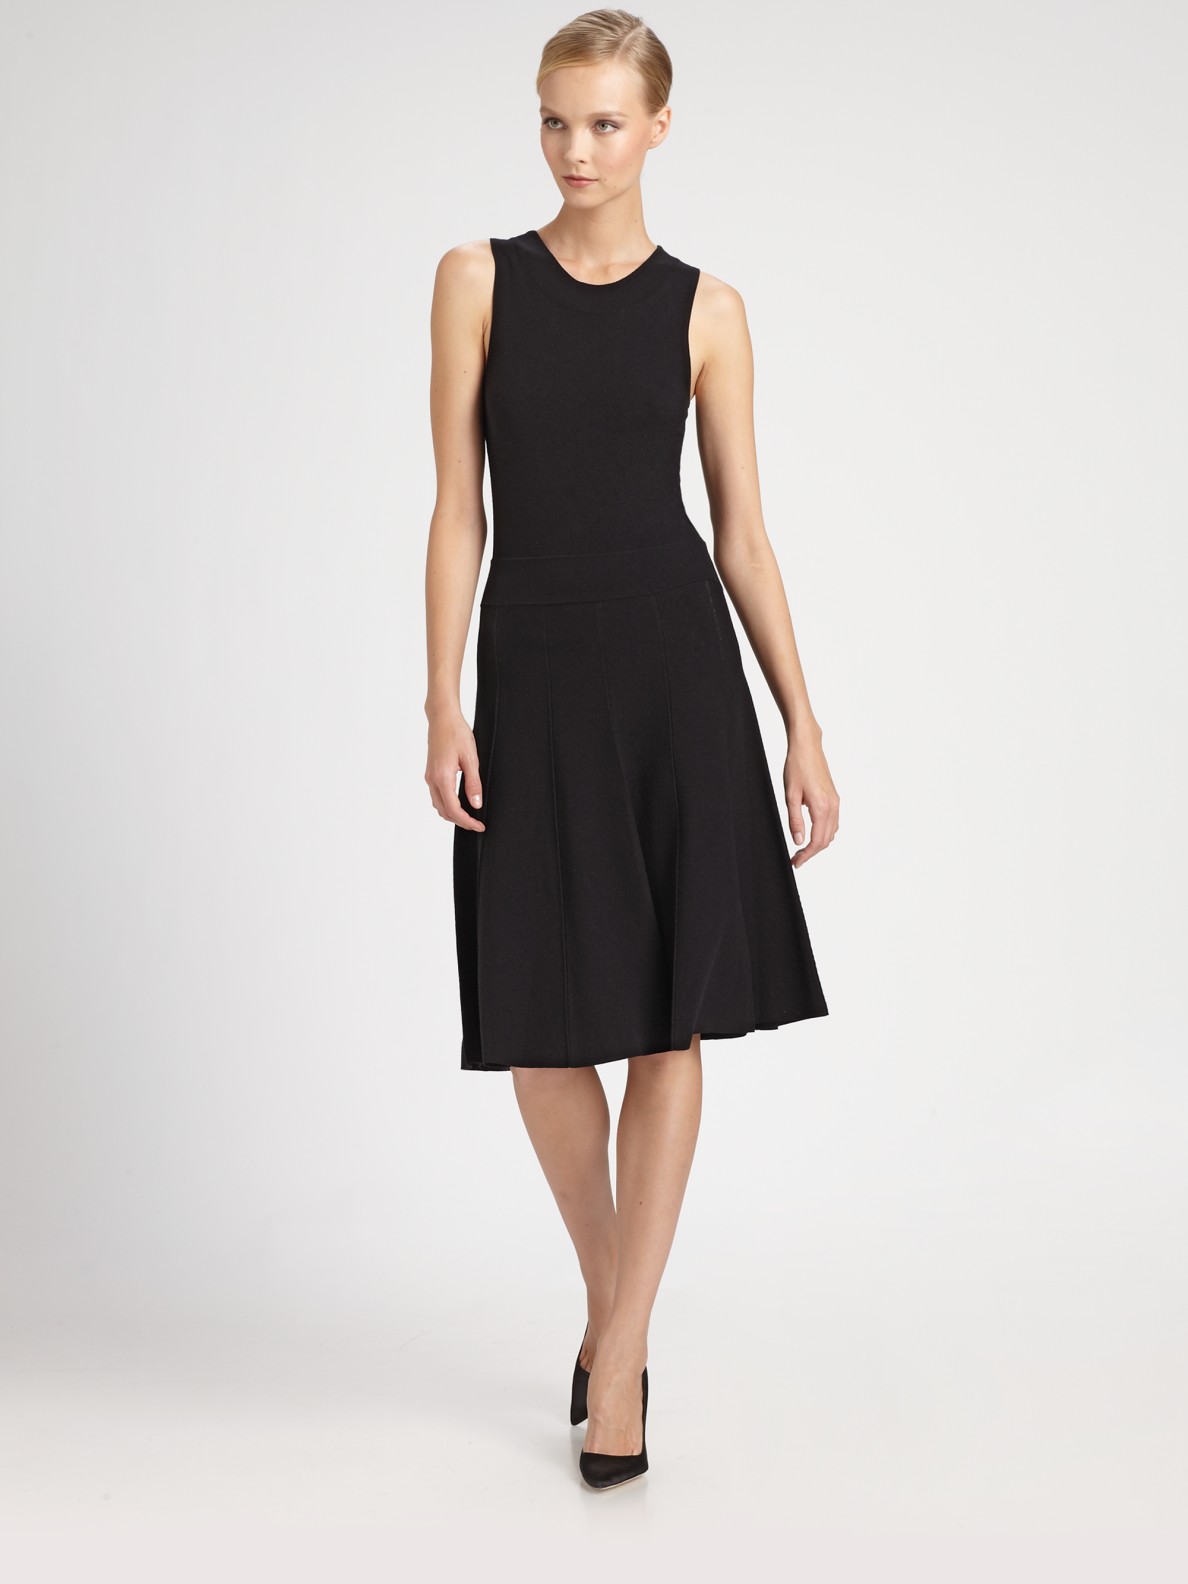 Donna Karan New York Paneled Dress in Black | Lyst